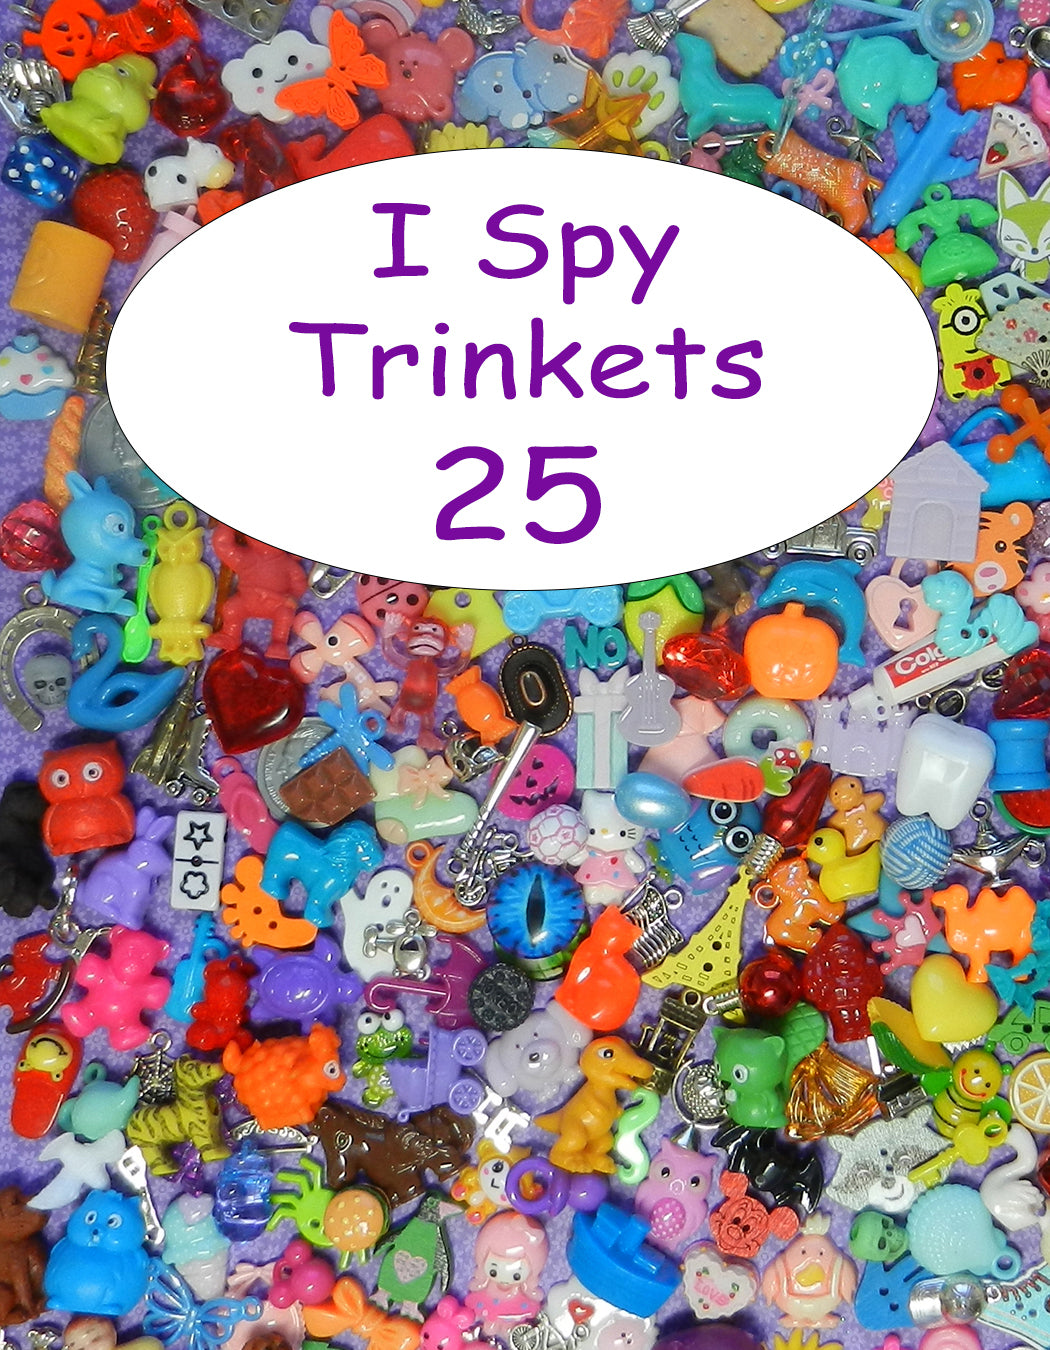 I Spy trinkets for boys (25 pc)